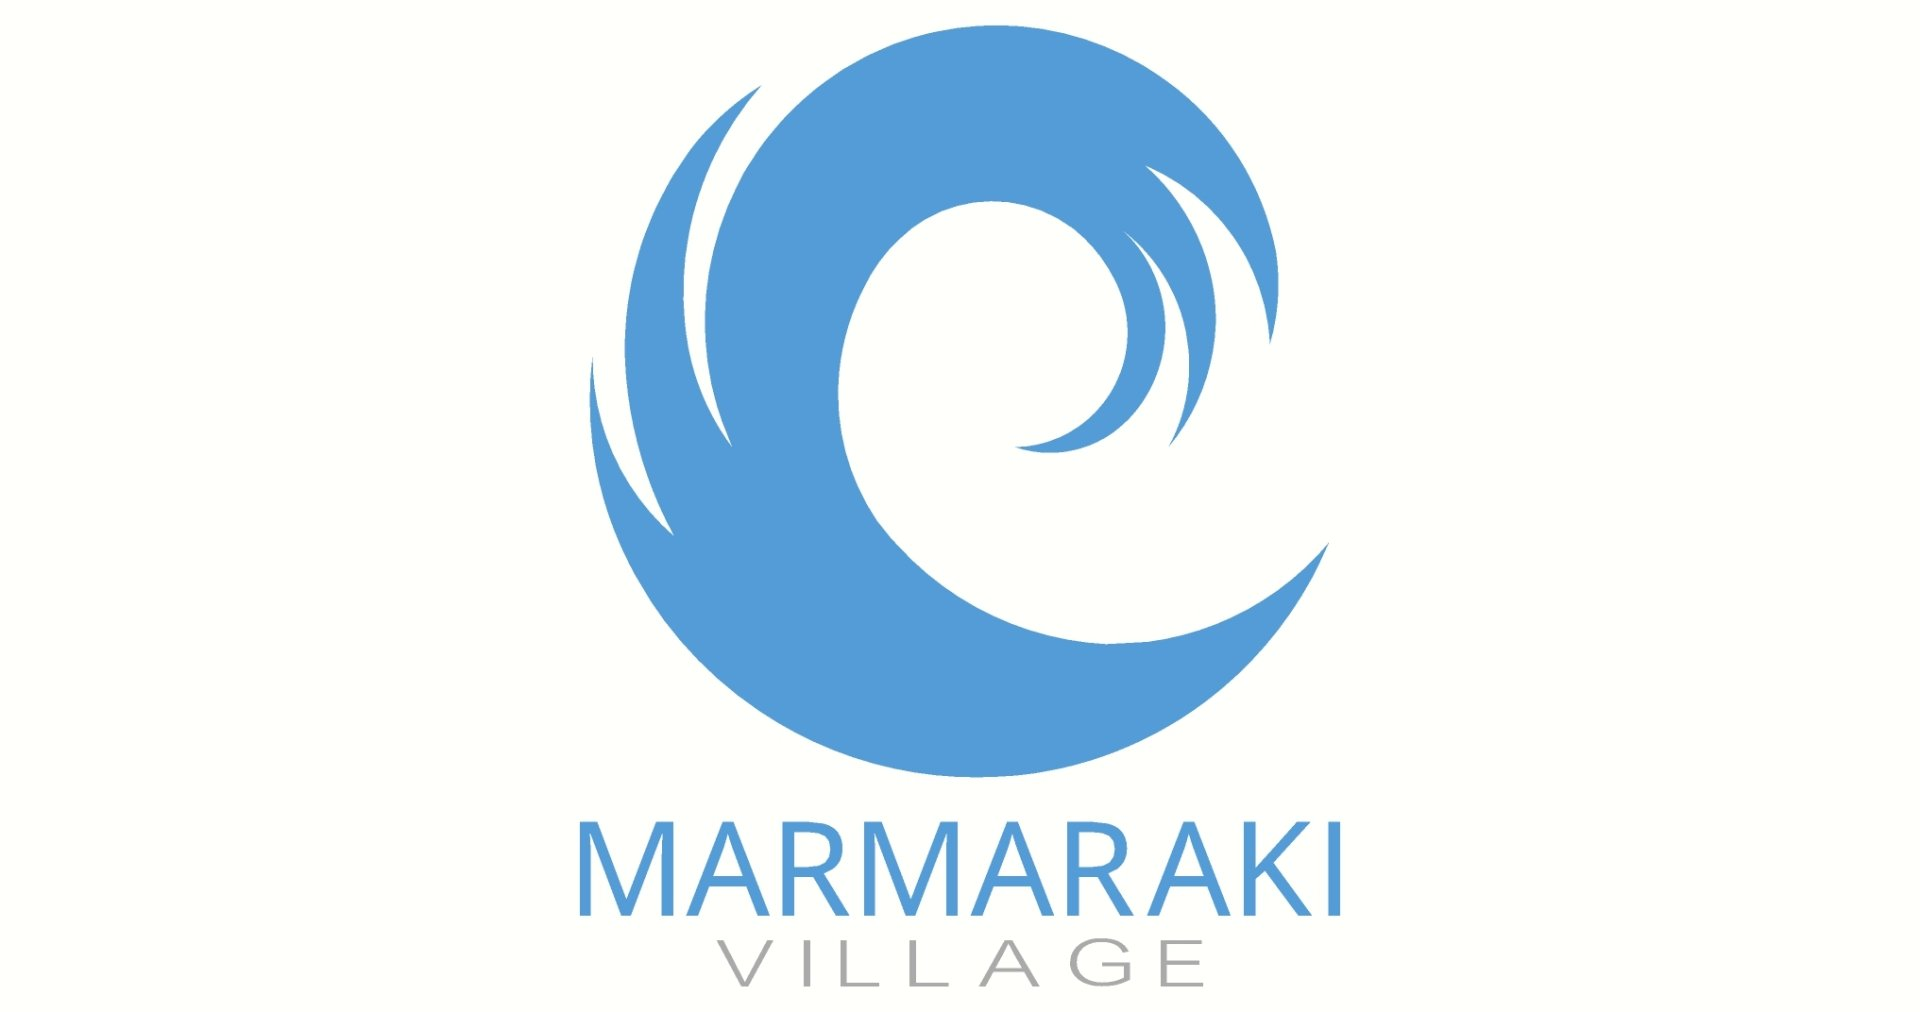 MARMARAKI village logo - Hotel Holiday House Apartments Resort Room